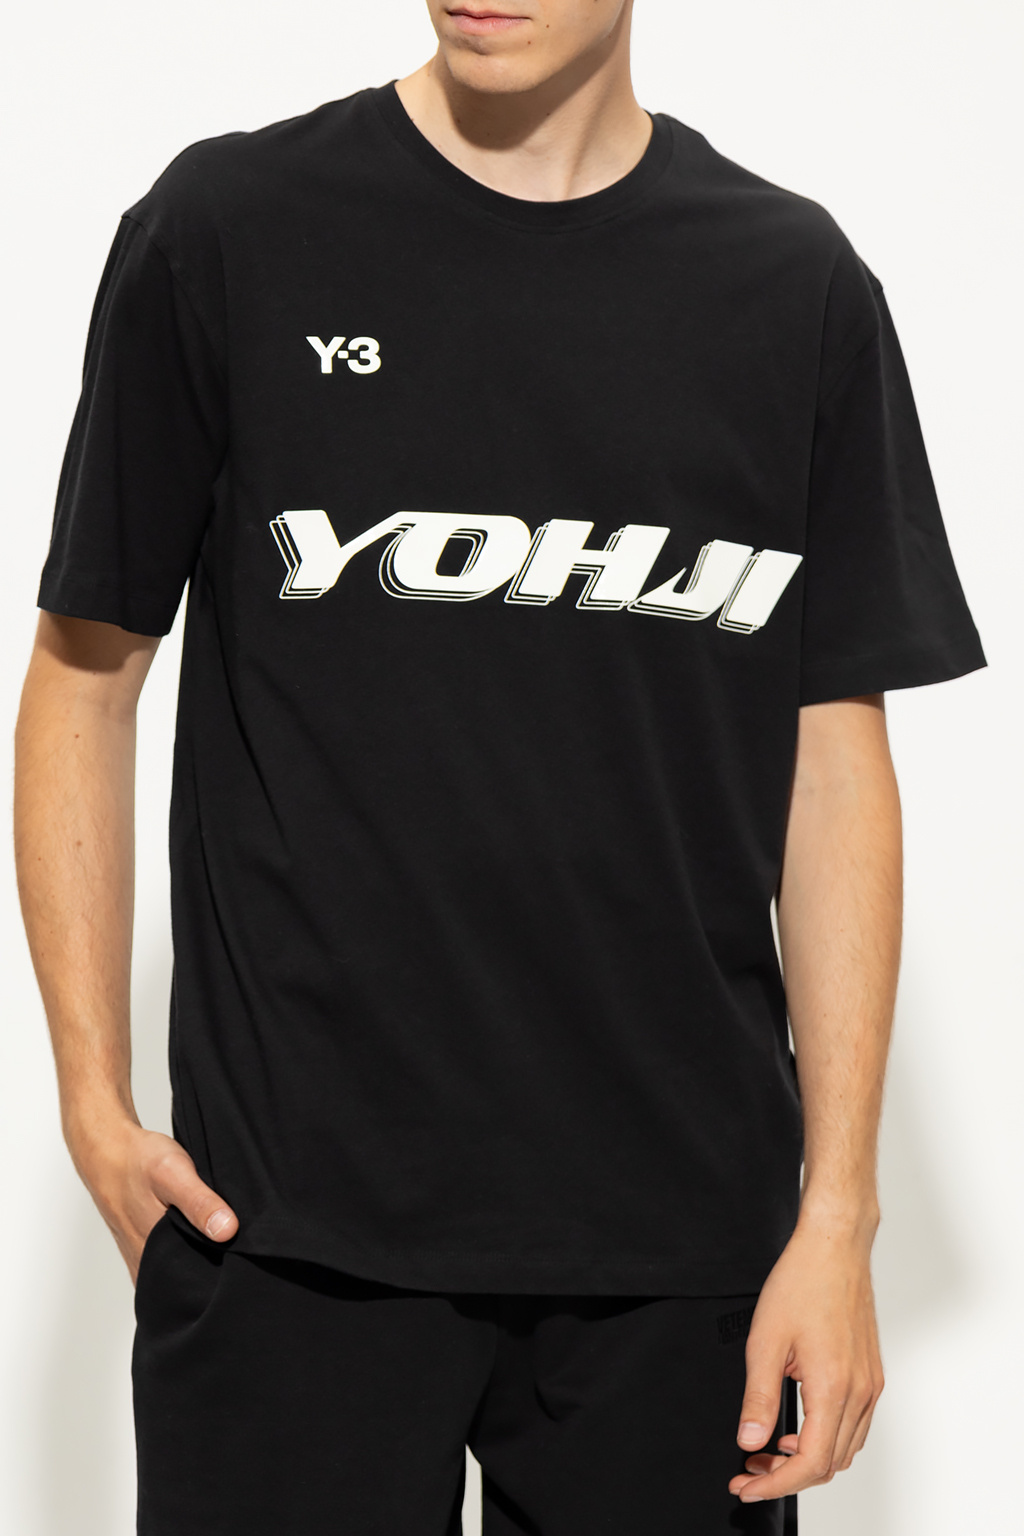 IetpShops Portugal - shirt Y - 3 Yohji Yamamoto - Logo T - stella